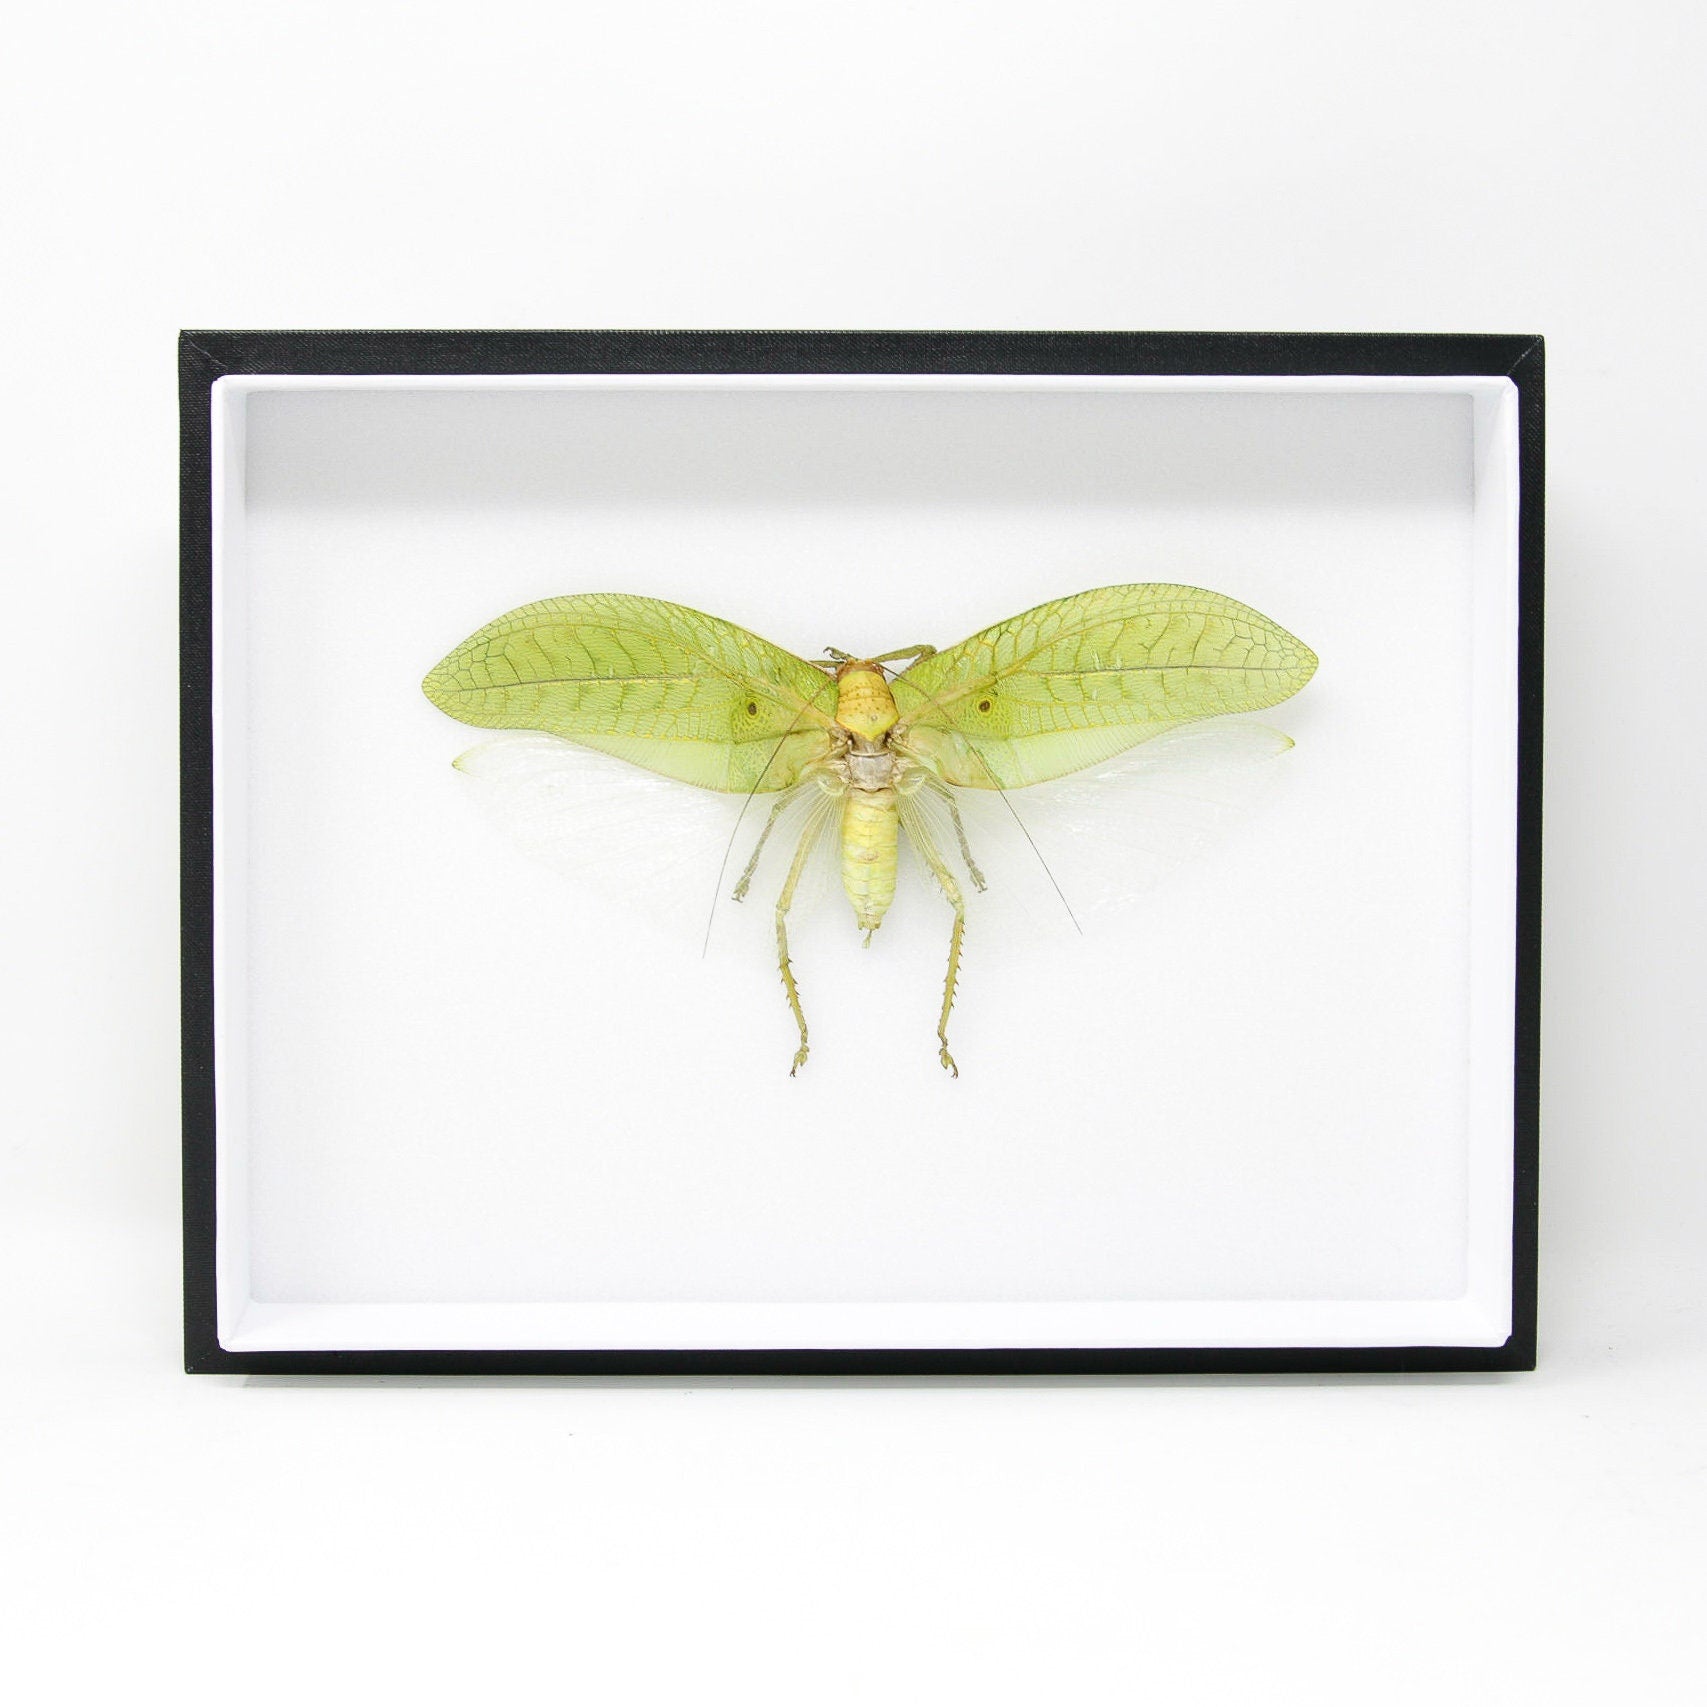 Giant Katydid Taxidermy Specimen Thailand | Museum Entomology Box Frame | 12x9x2 inch (JA06)